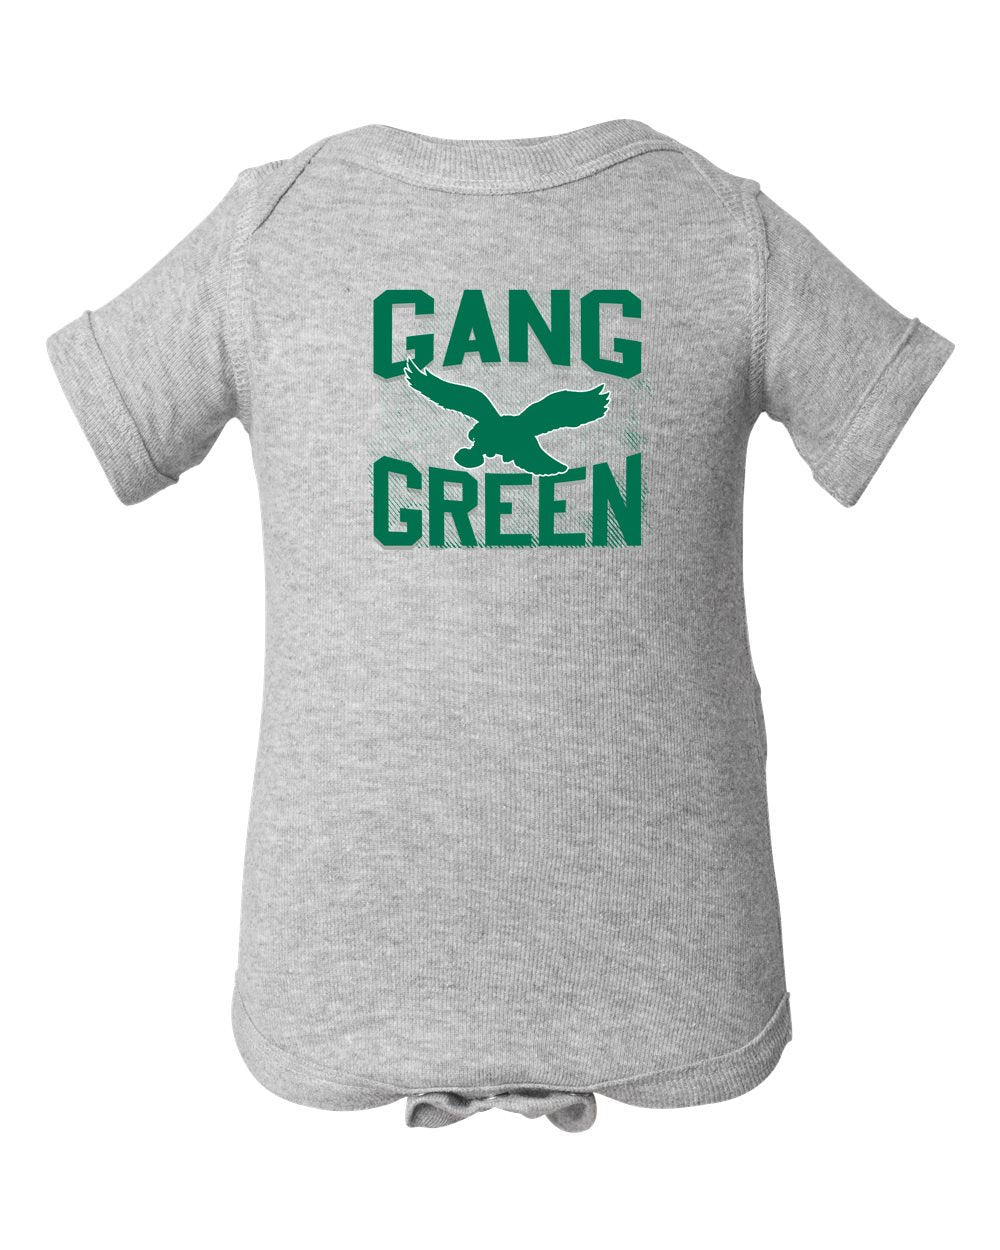 Gang Green INFANT Onesie